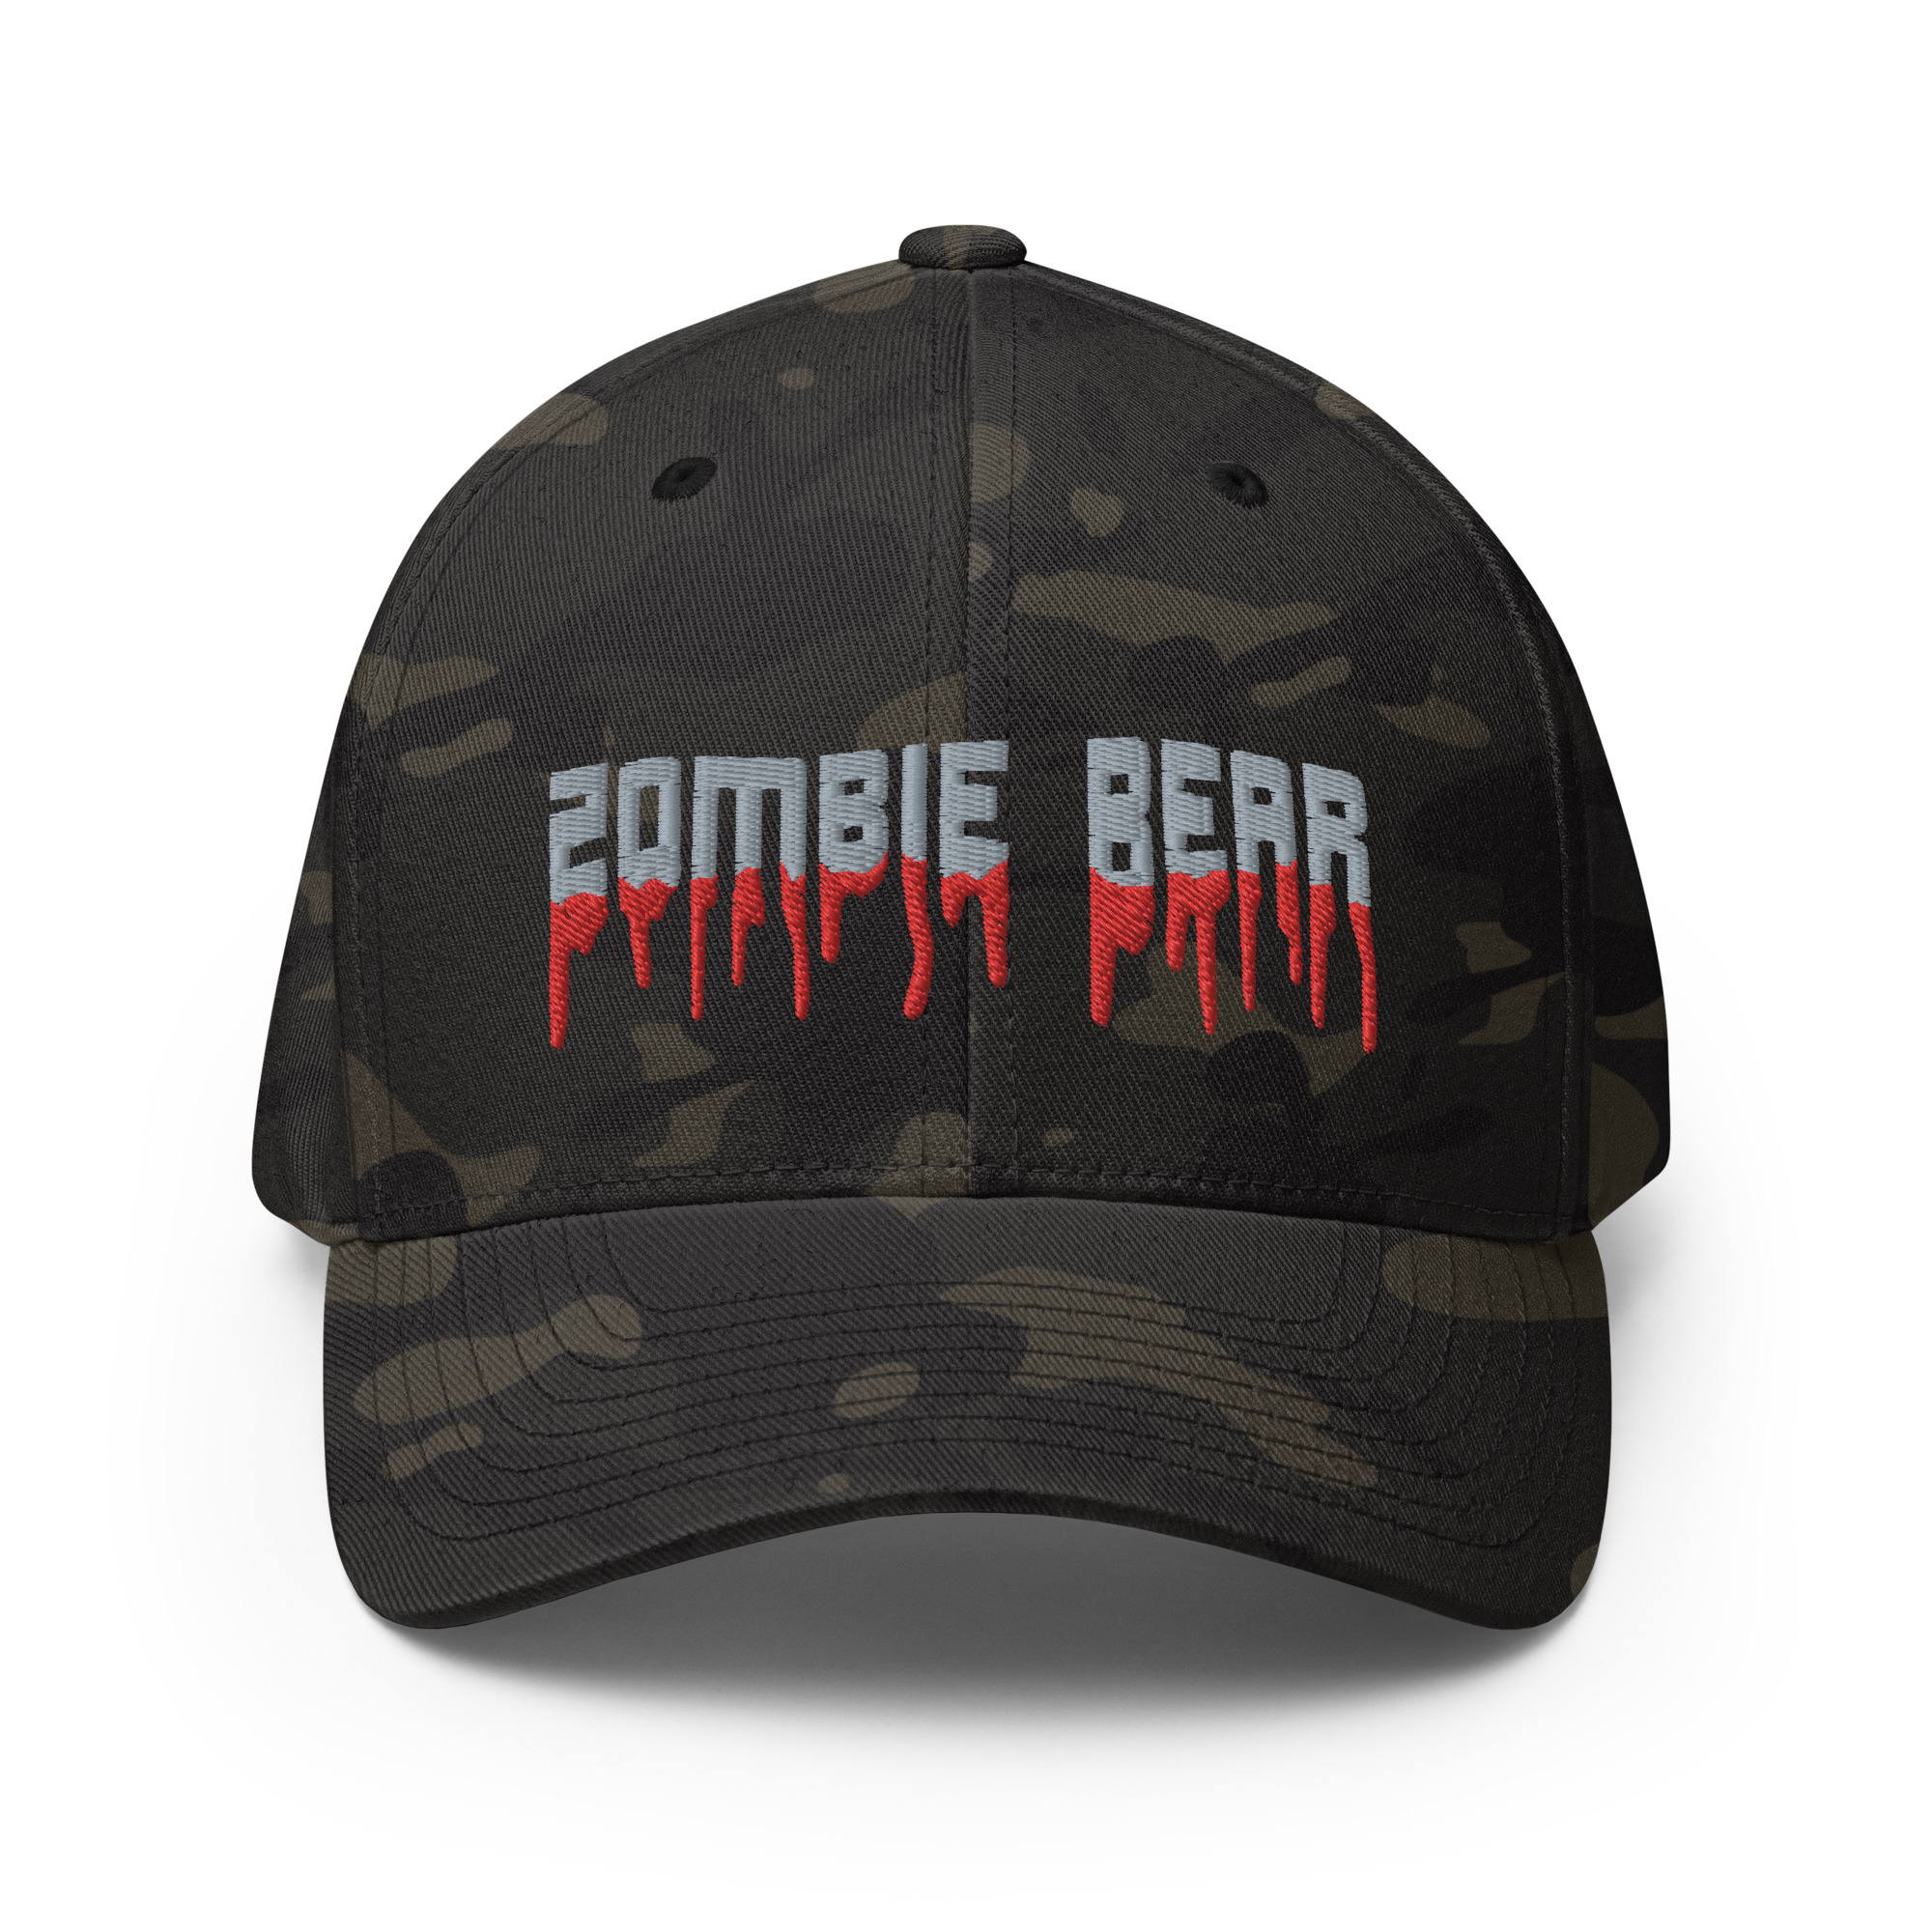 Zombie Bear - Structured Twill Flexfit Cap